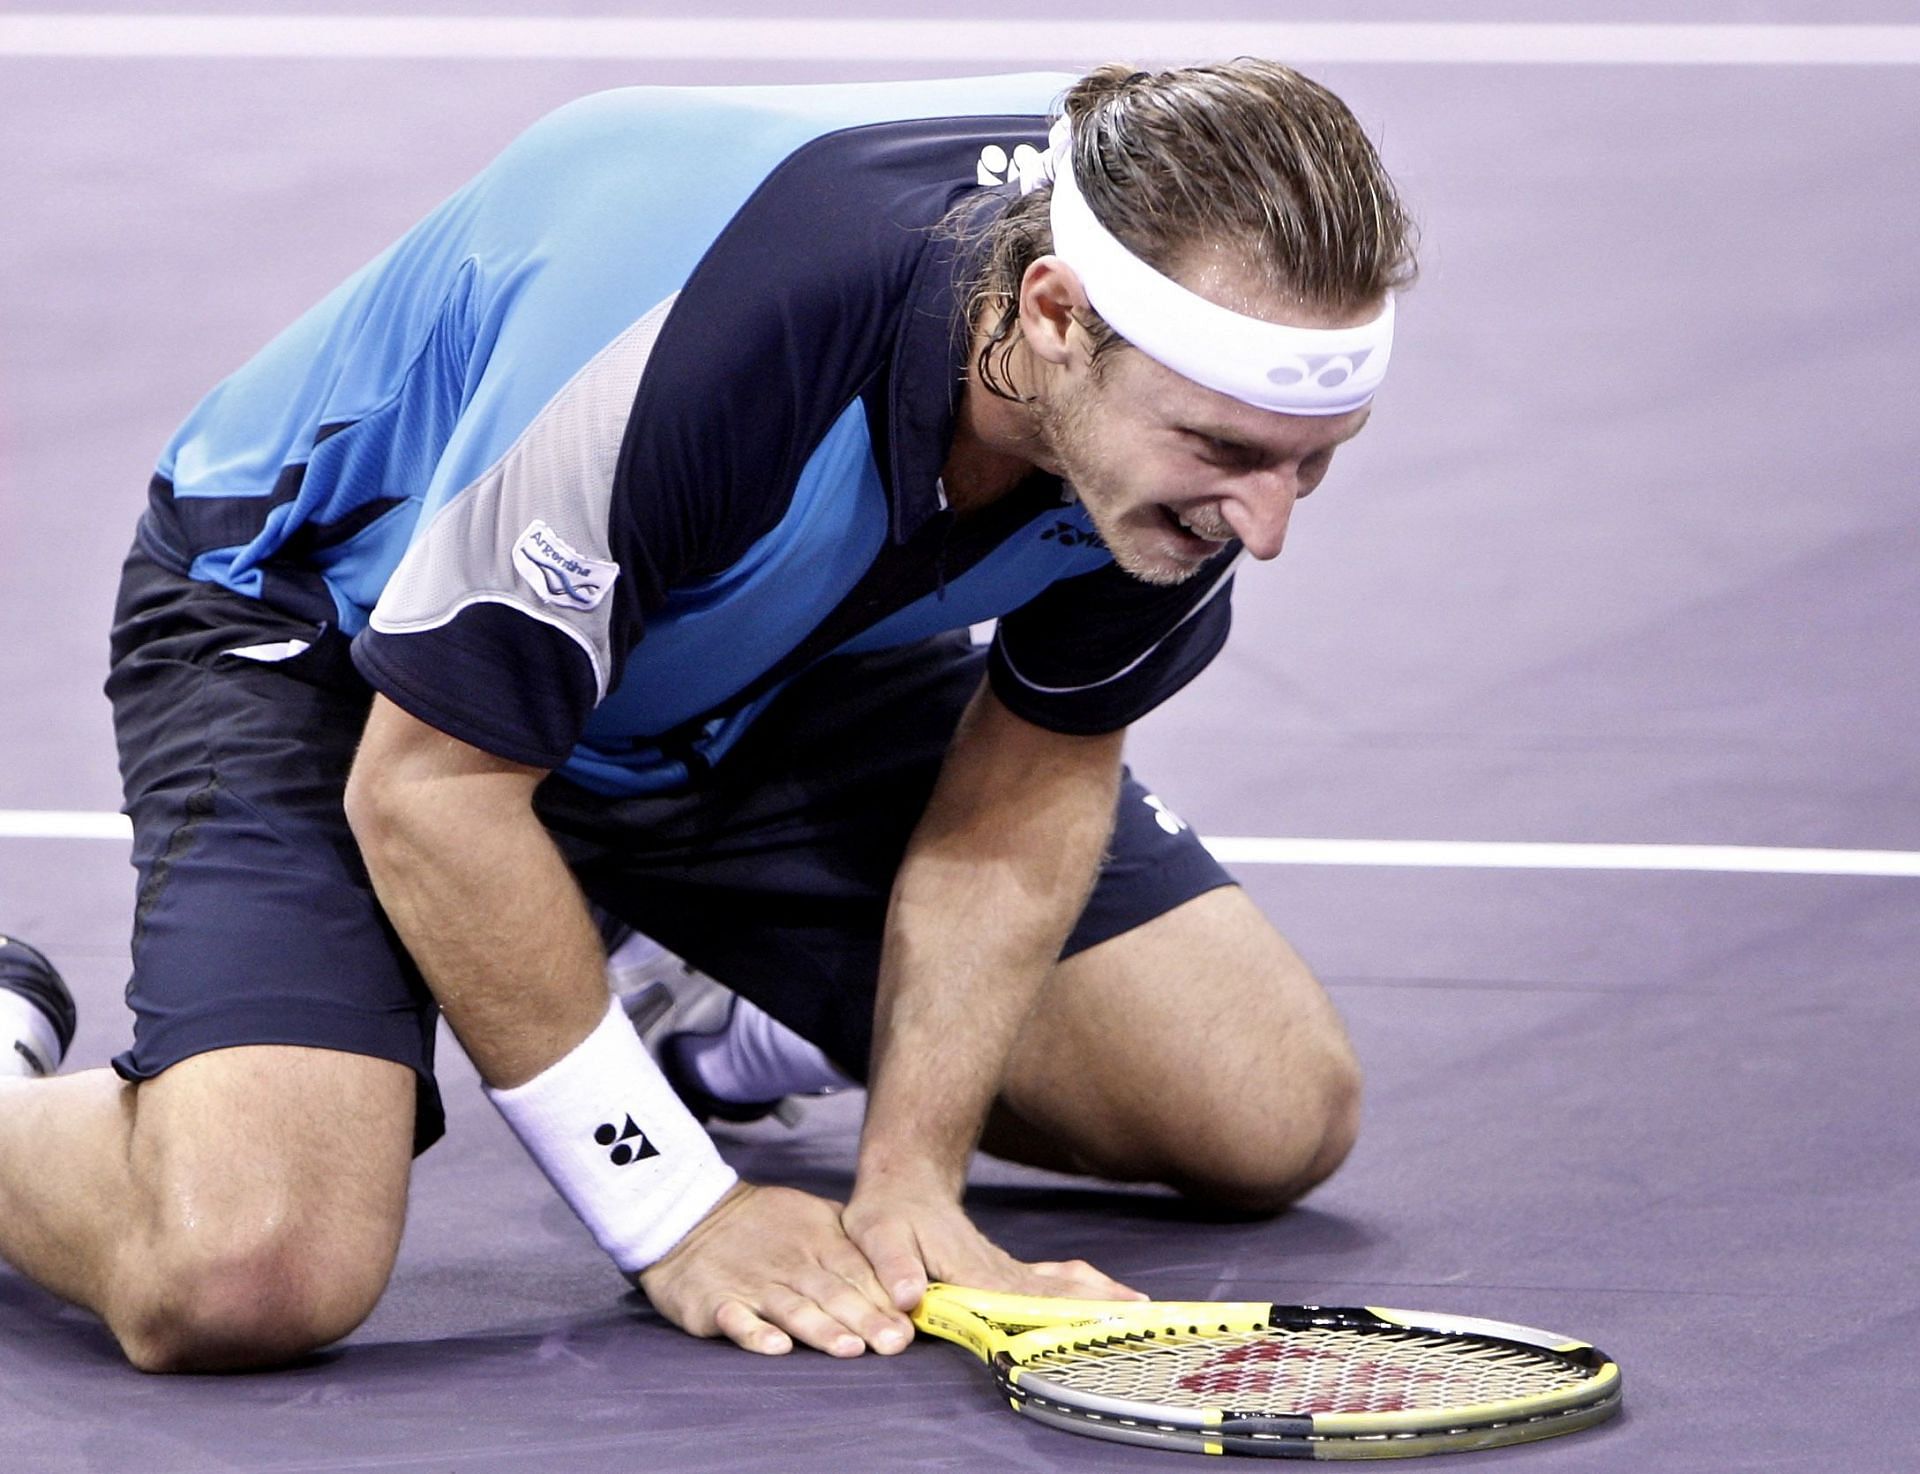 David Nalbandian at the 2007 ATP Masters Series in Madrid.